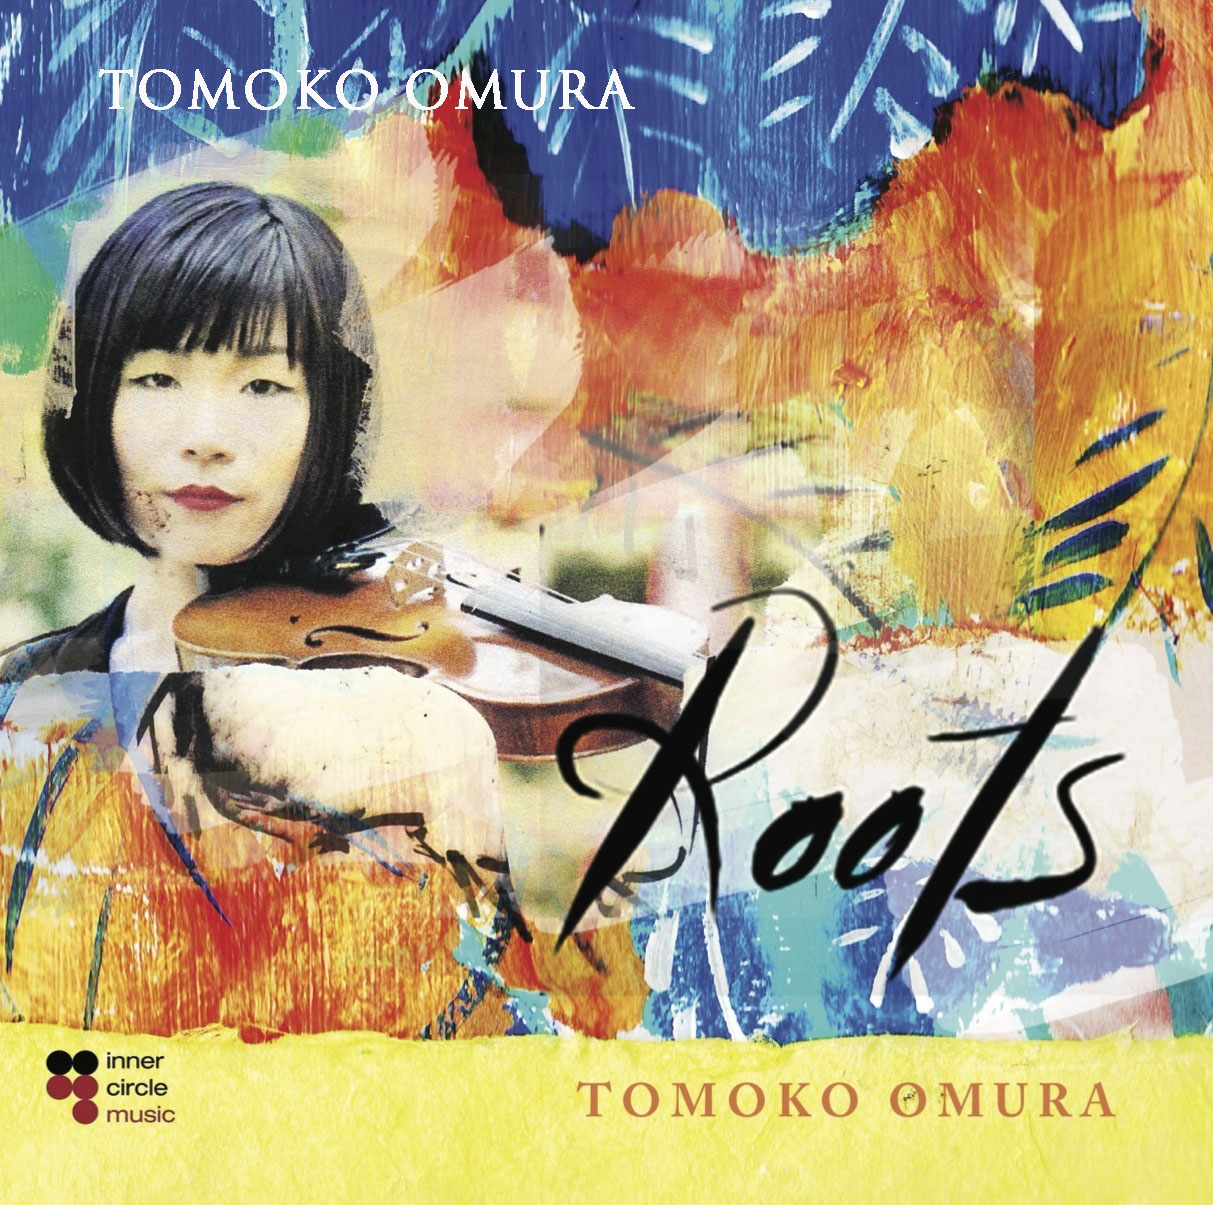 Tomoko Omura